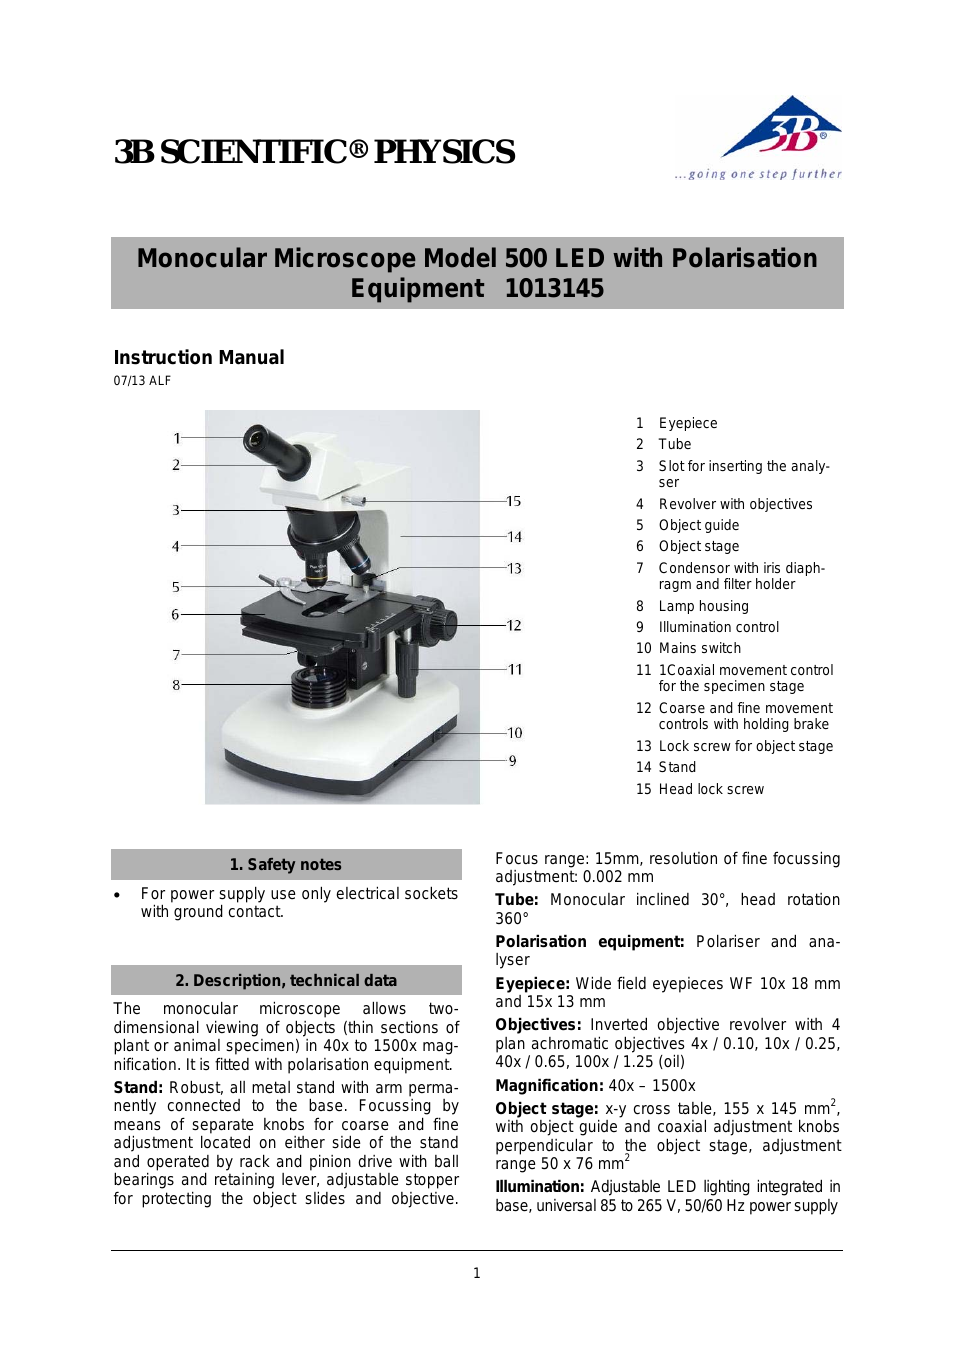 Monocular Microscope Model 500 LED with Polarisation Equipment